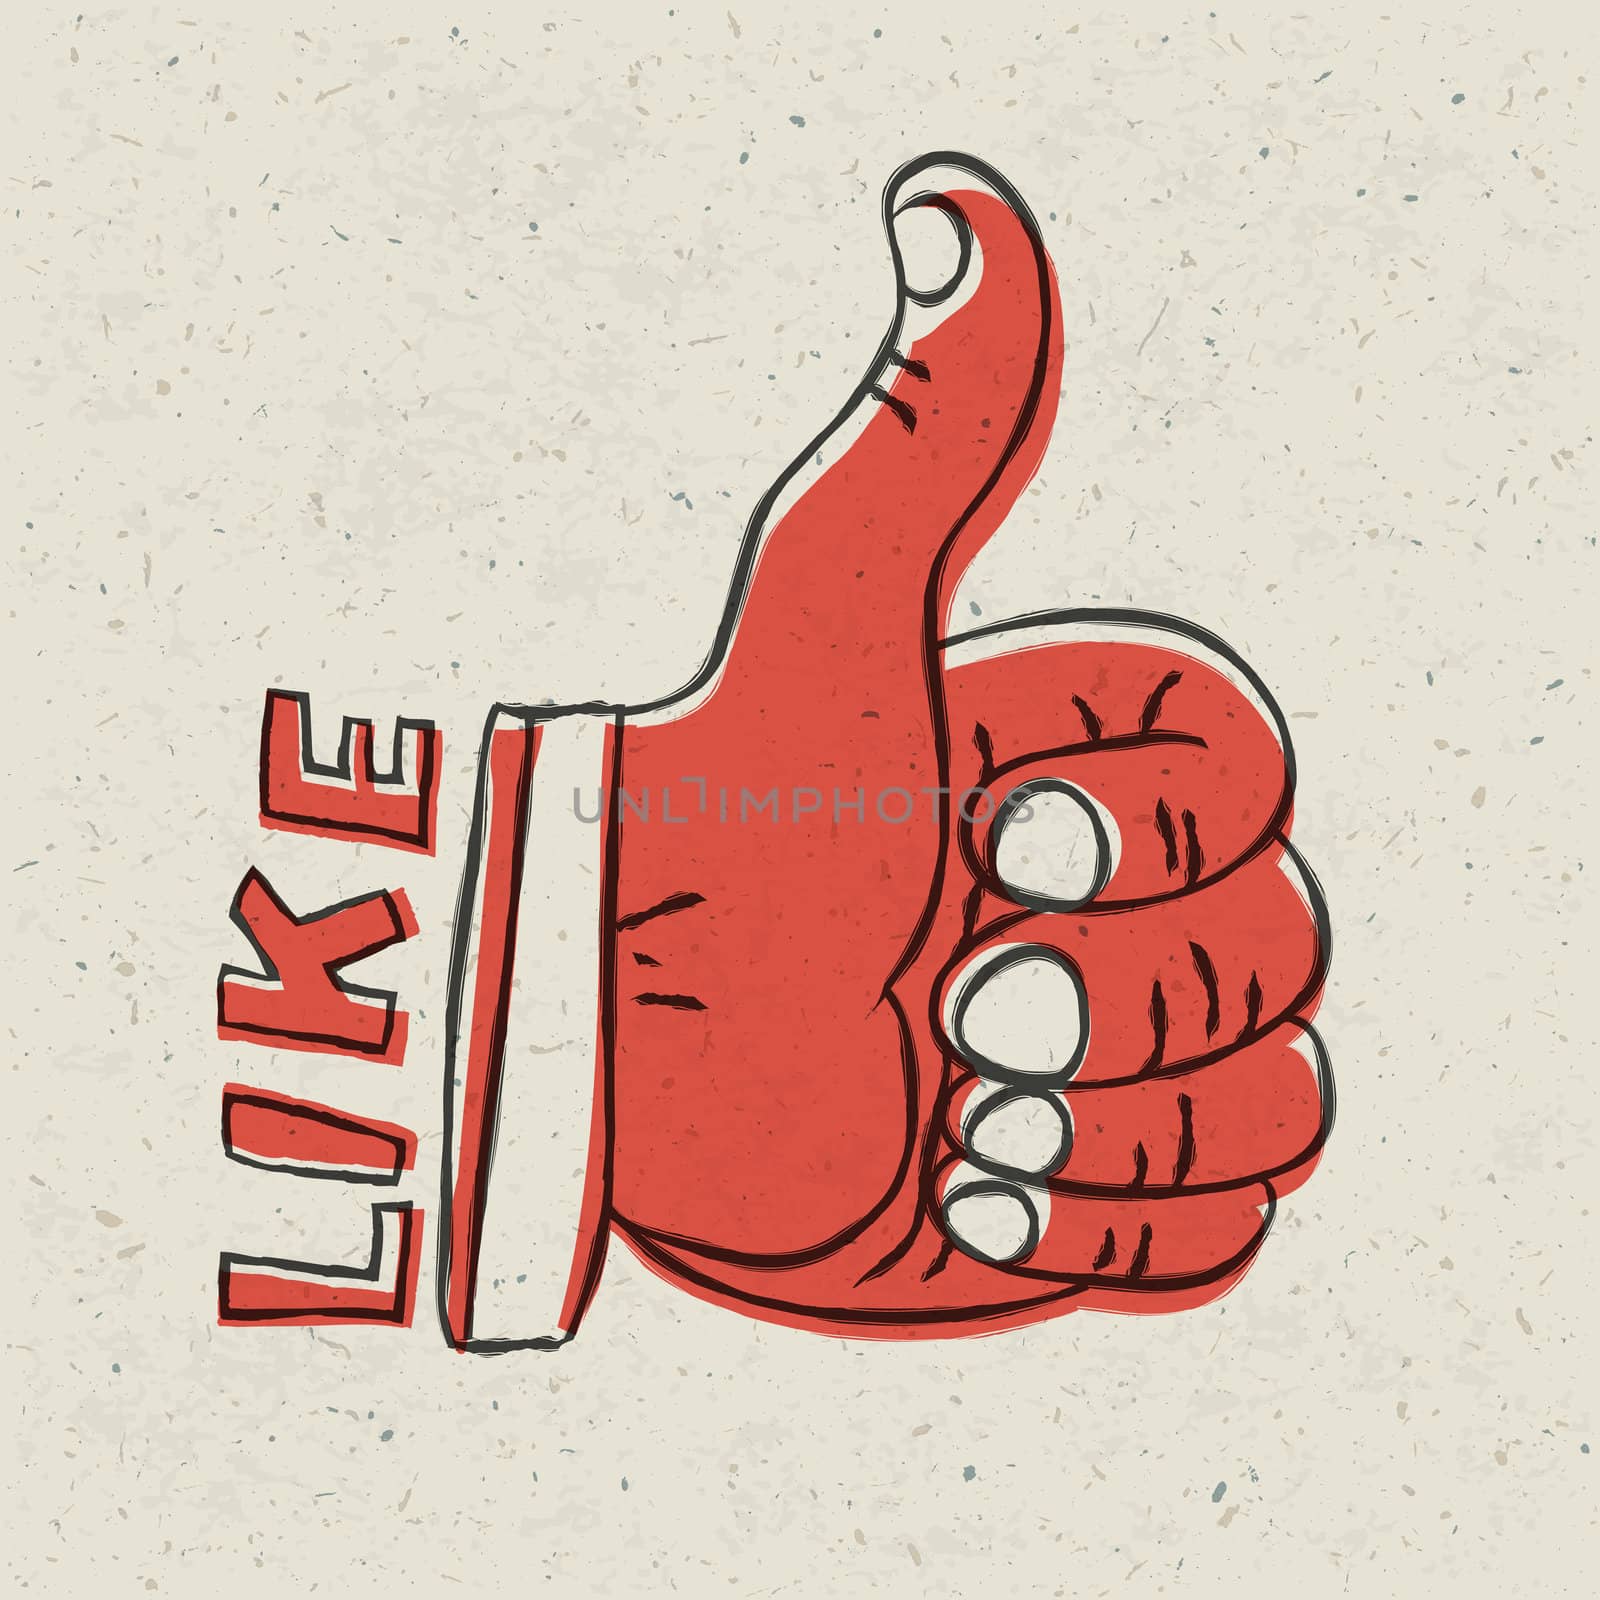 Thumb up symbol. Retro styled vector illustration, EPS10  by pashabo